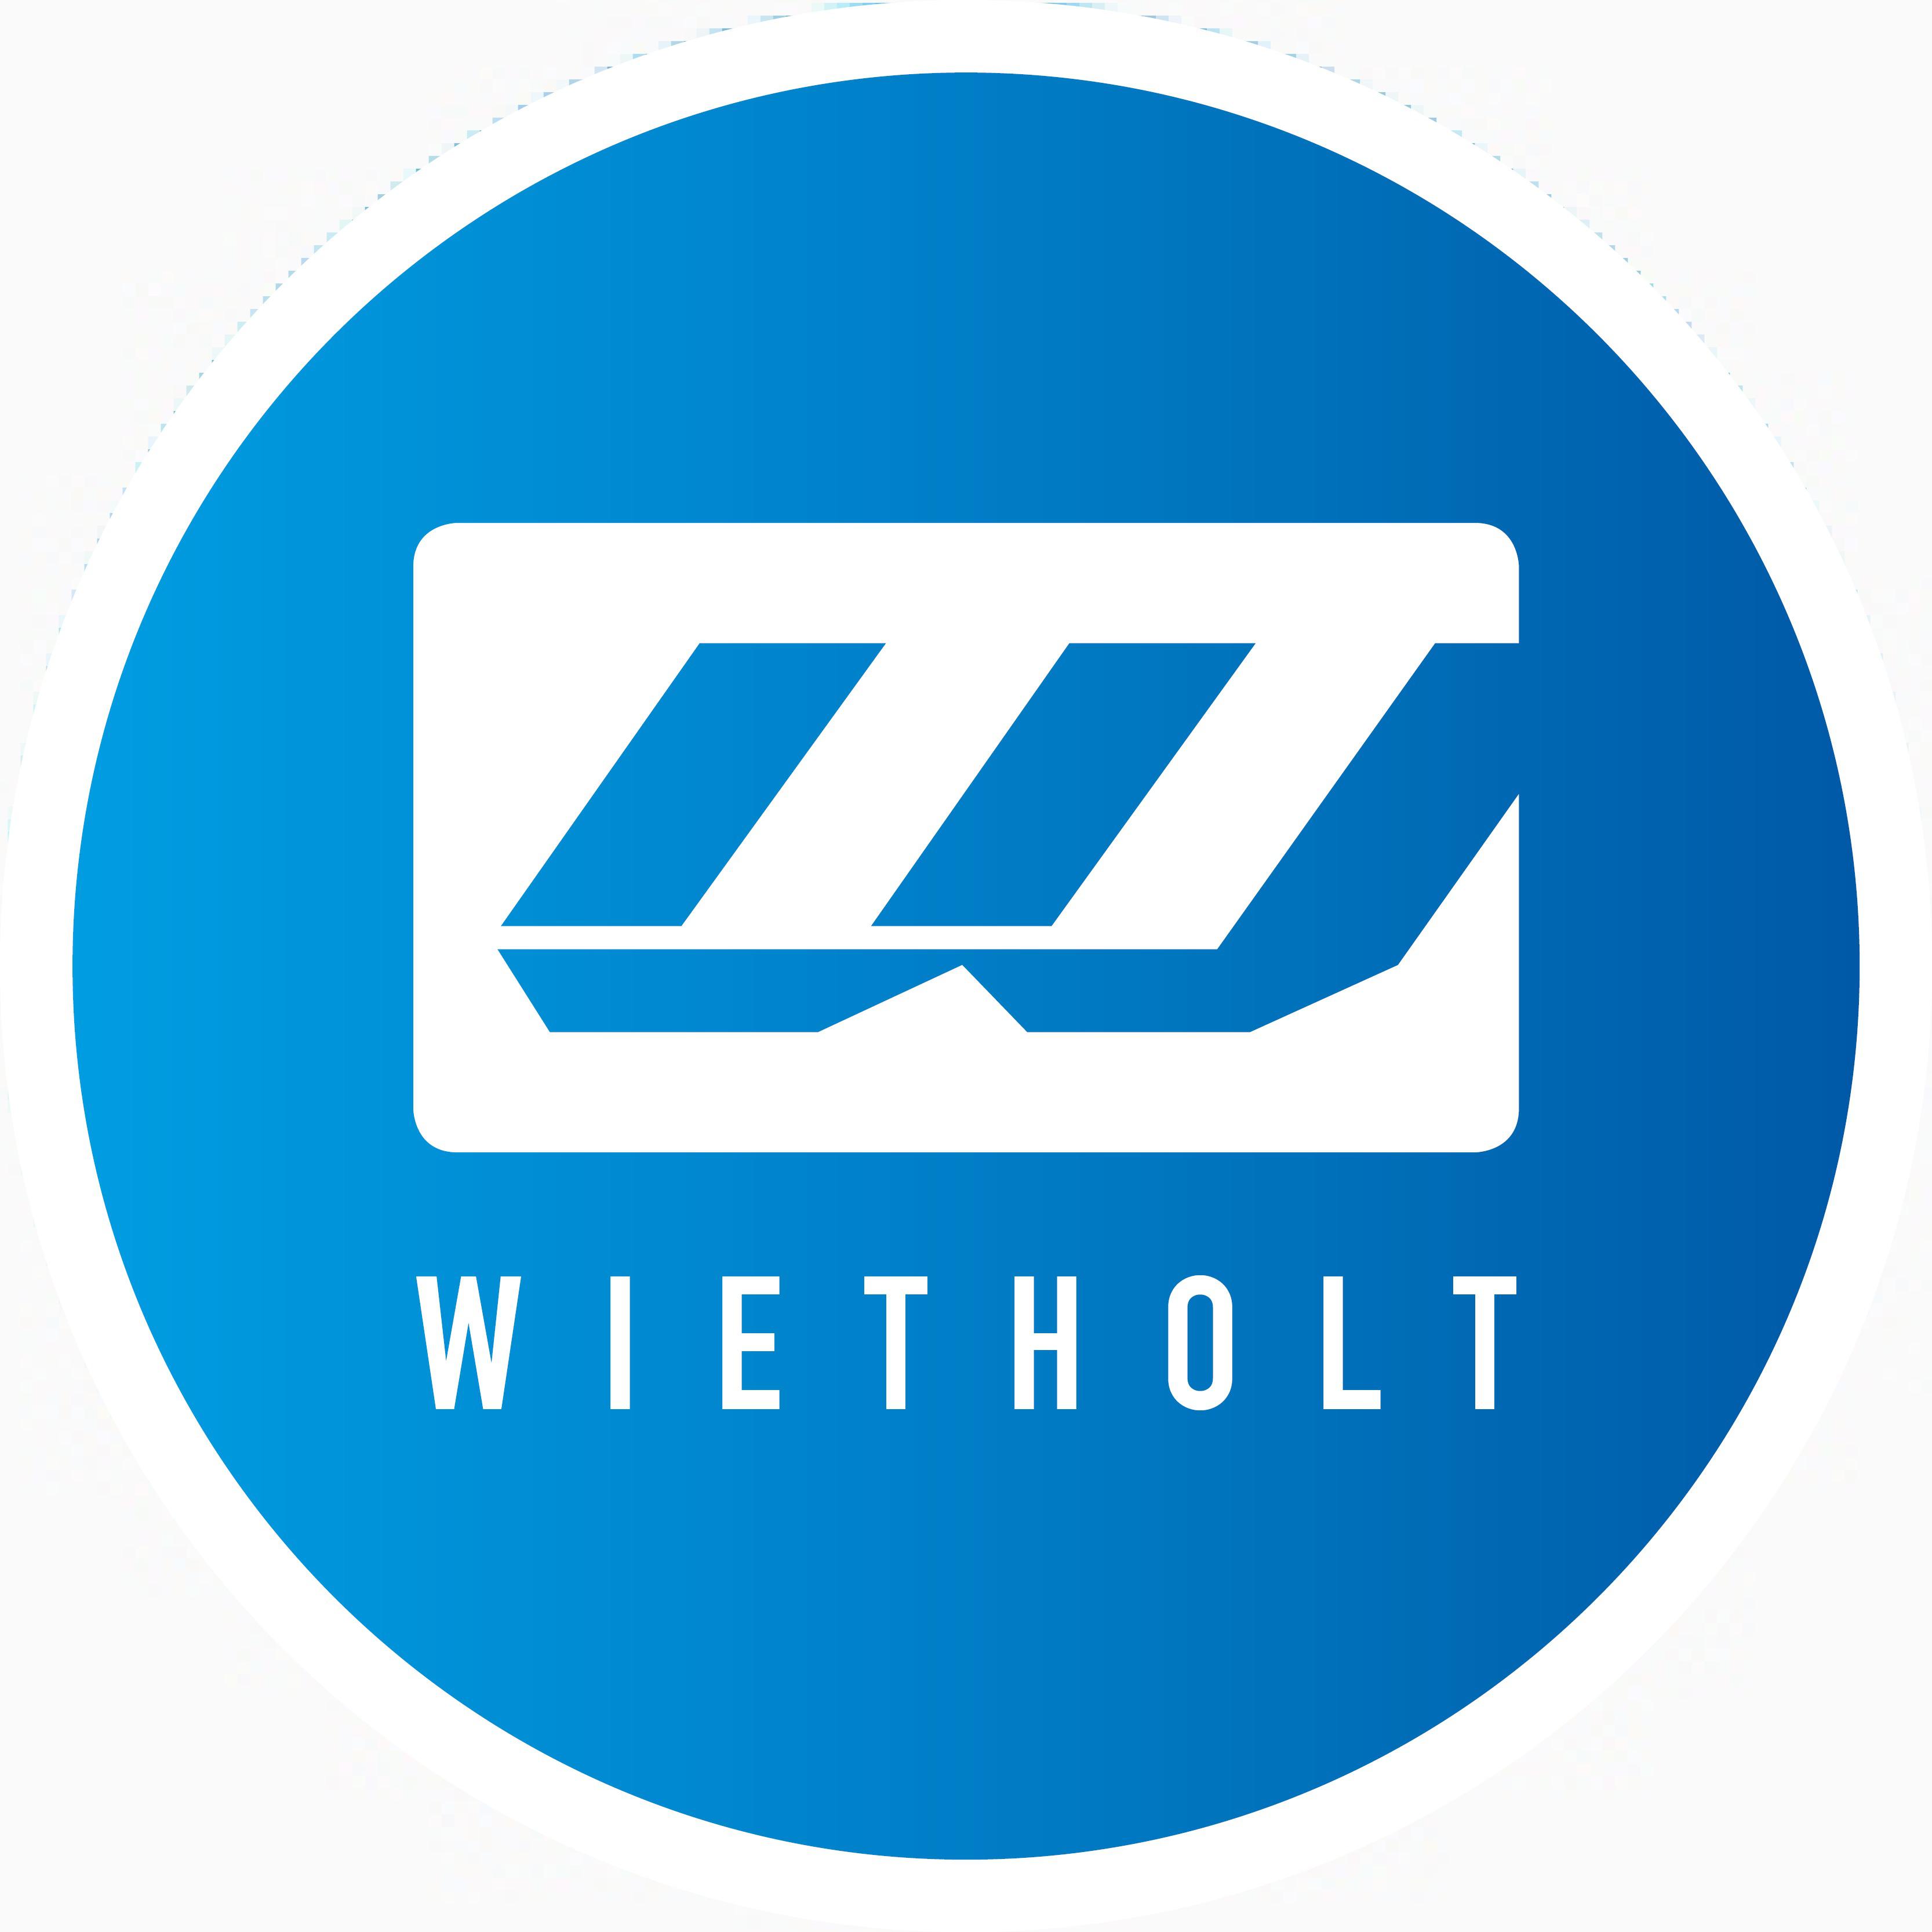 Wietholt in Velen - Logo